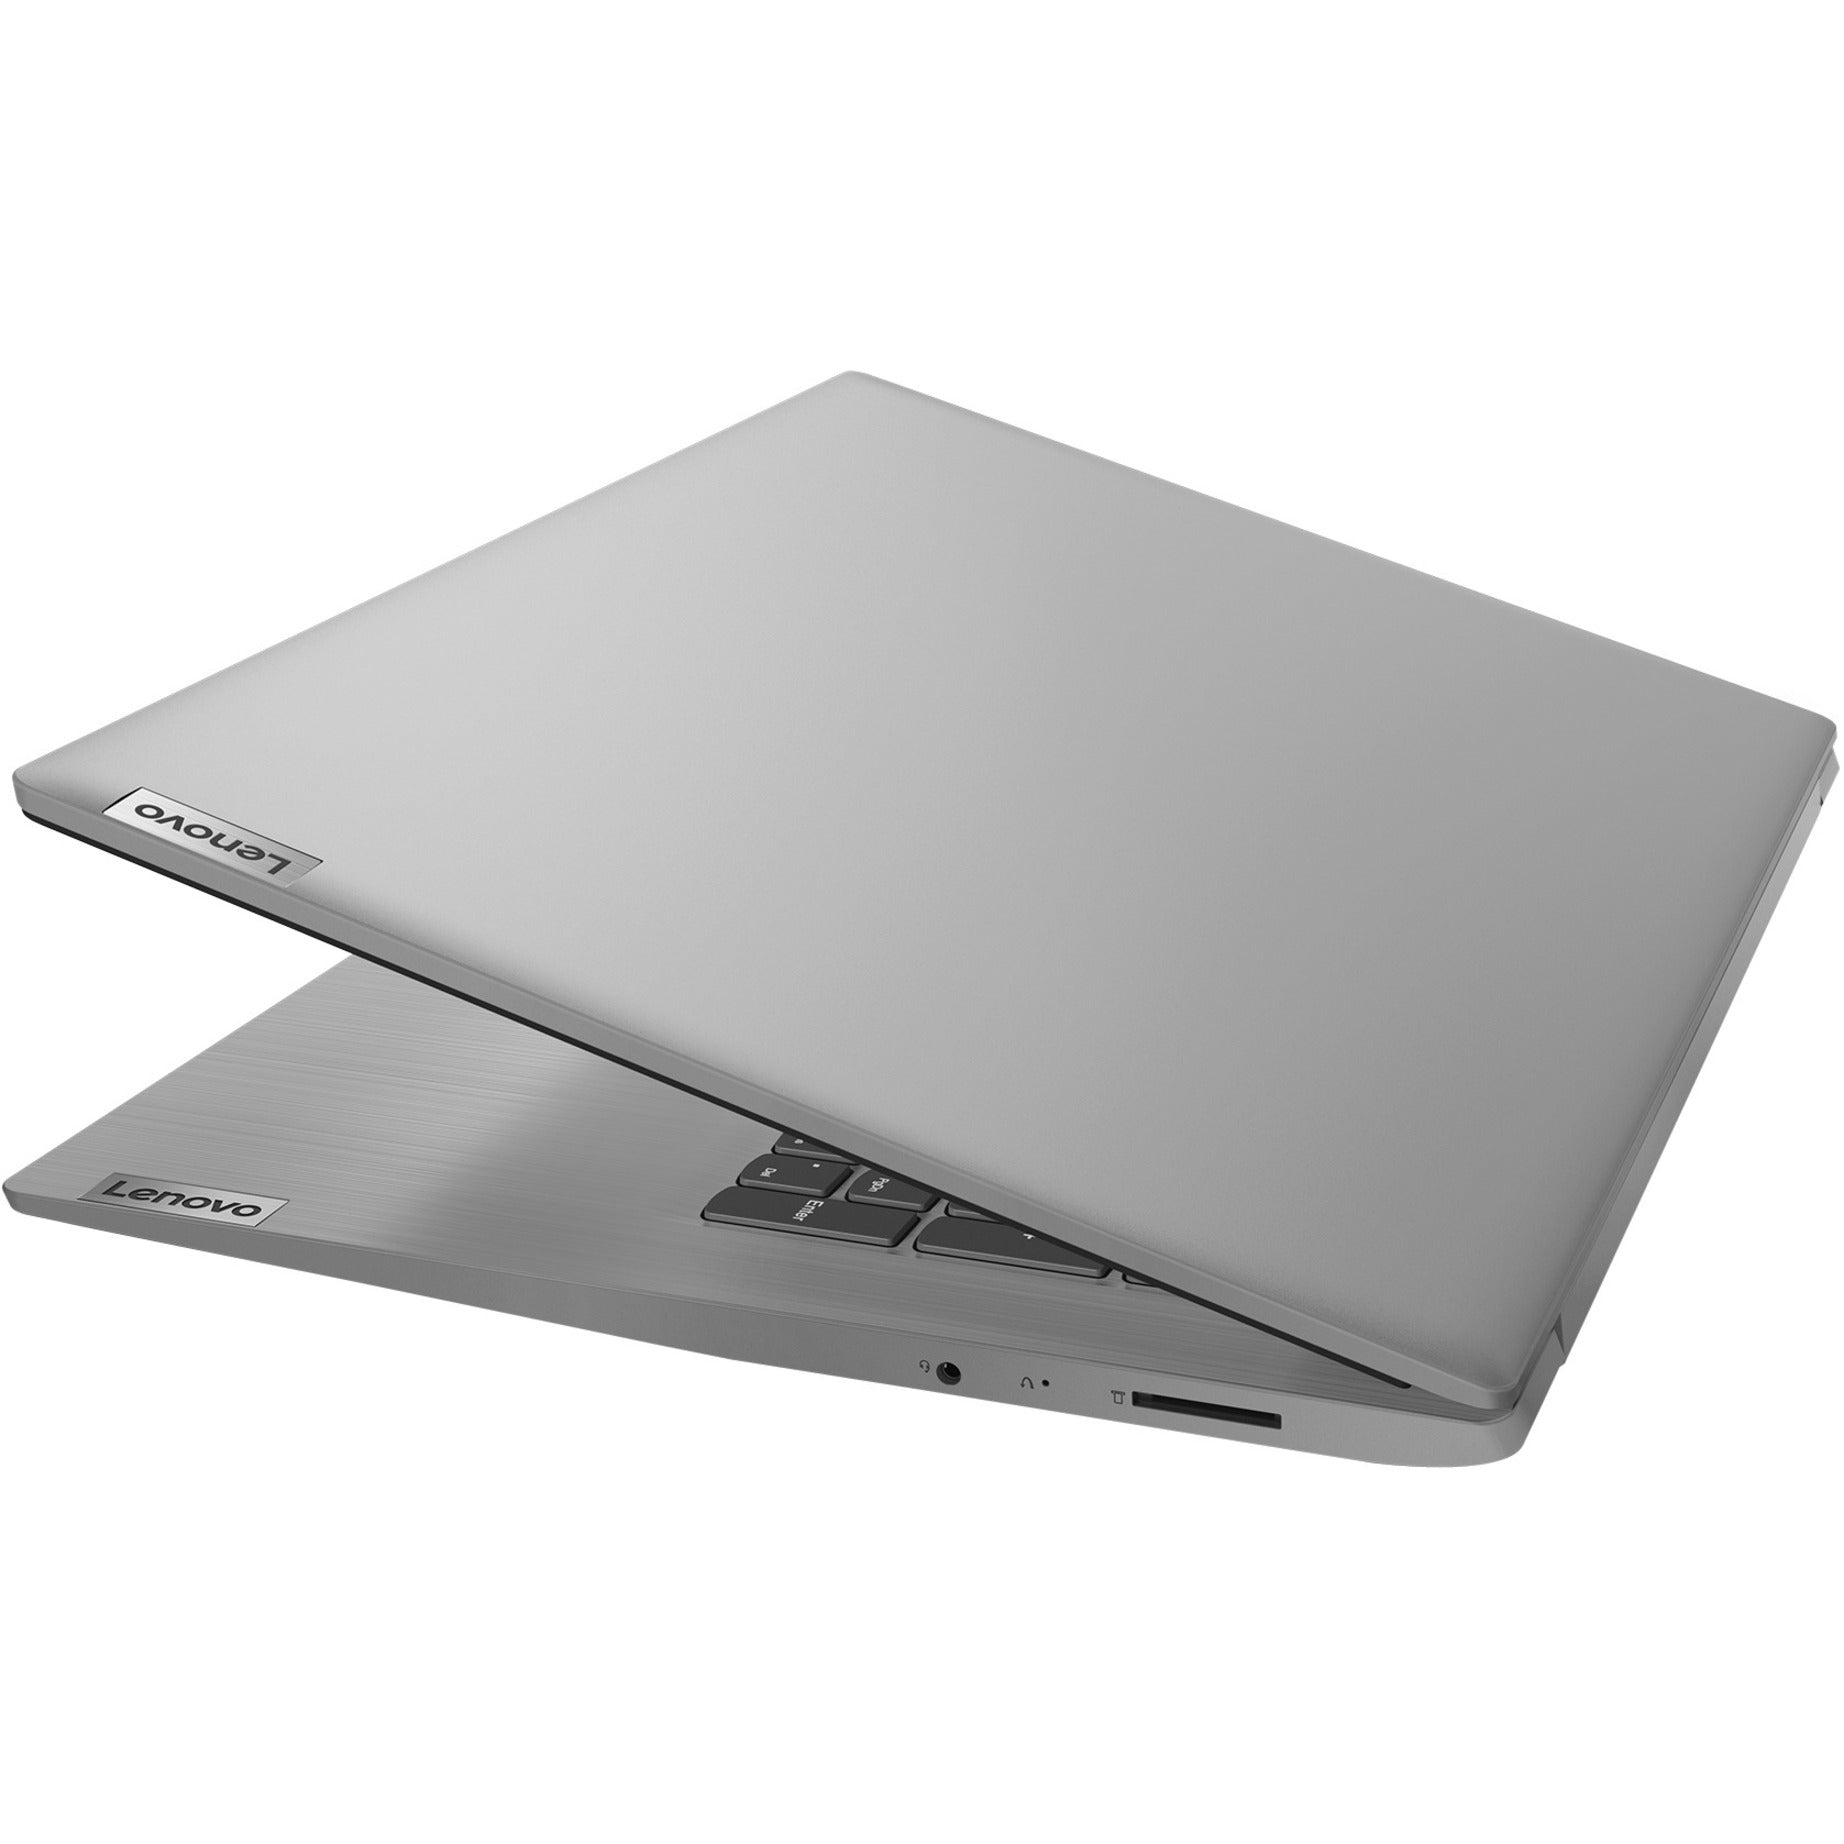 Lenovo 81X800ENUS IdeaPad 3 15" HD Touch Screen Laptop, Intel Core i3-1115G4, 8GB Memory, 256GB SSD, Platinum Grey